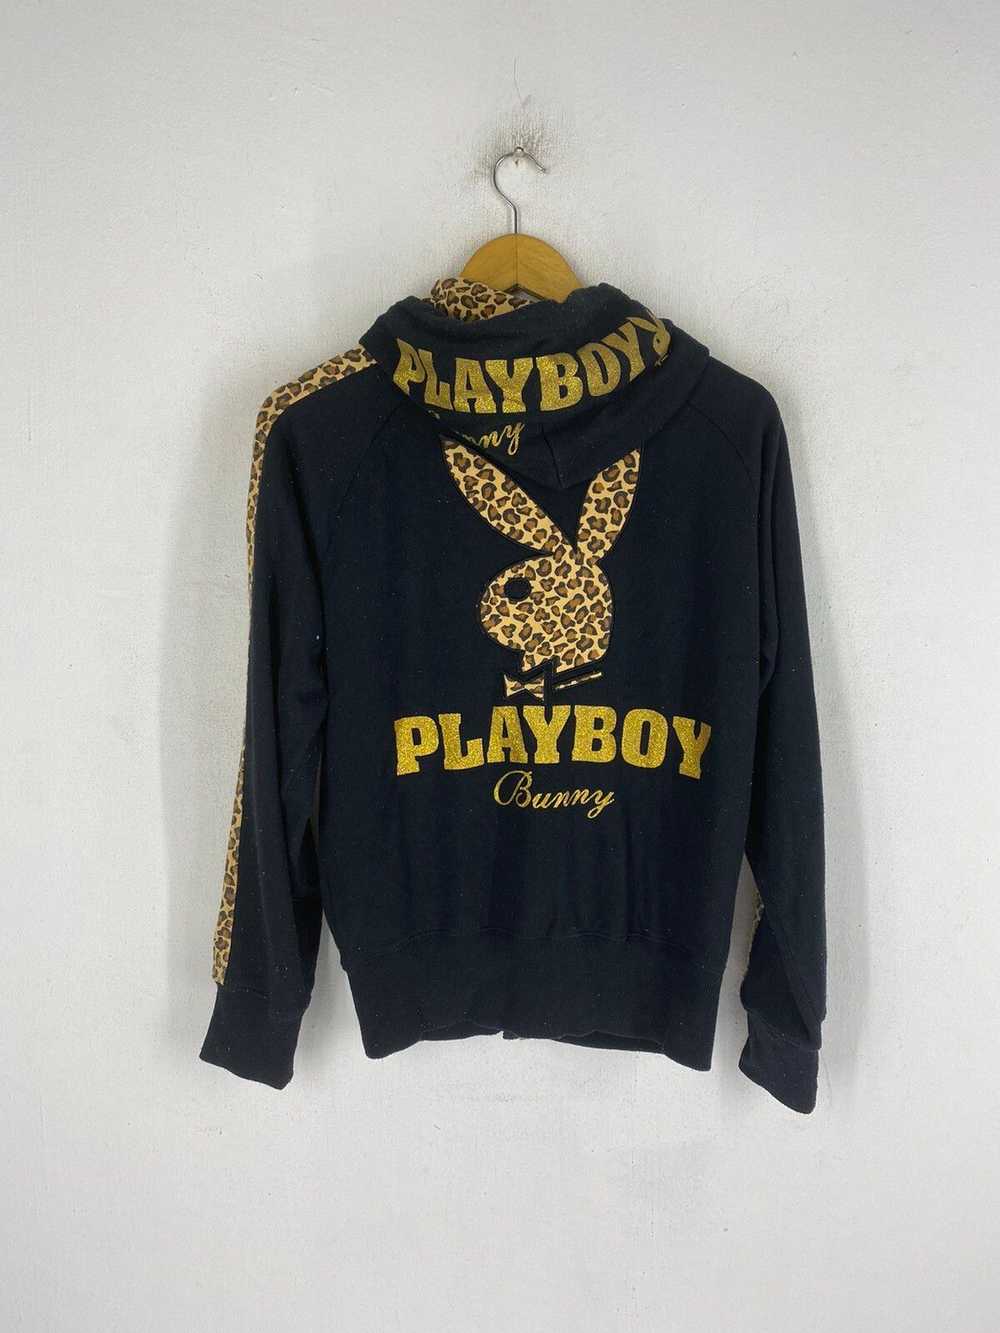 Playboy Playboy bunny big logo leopard - image 1